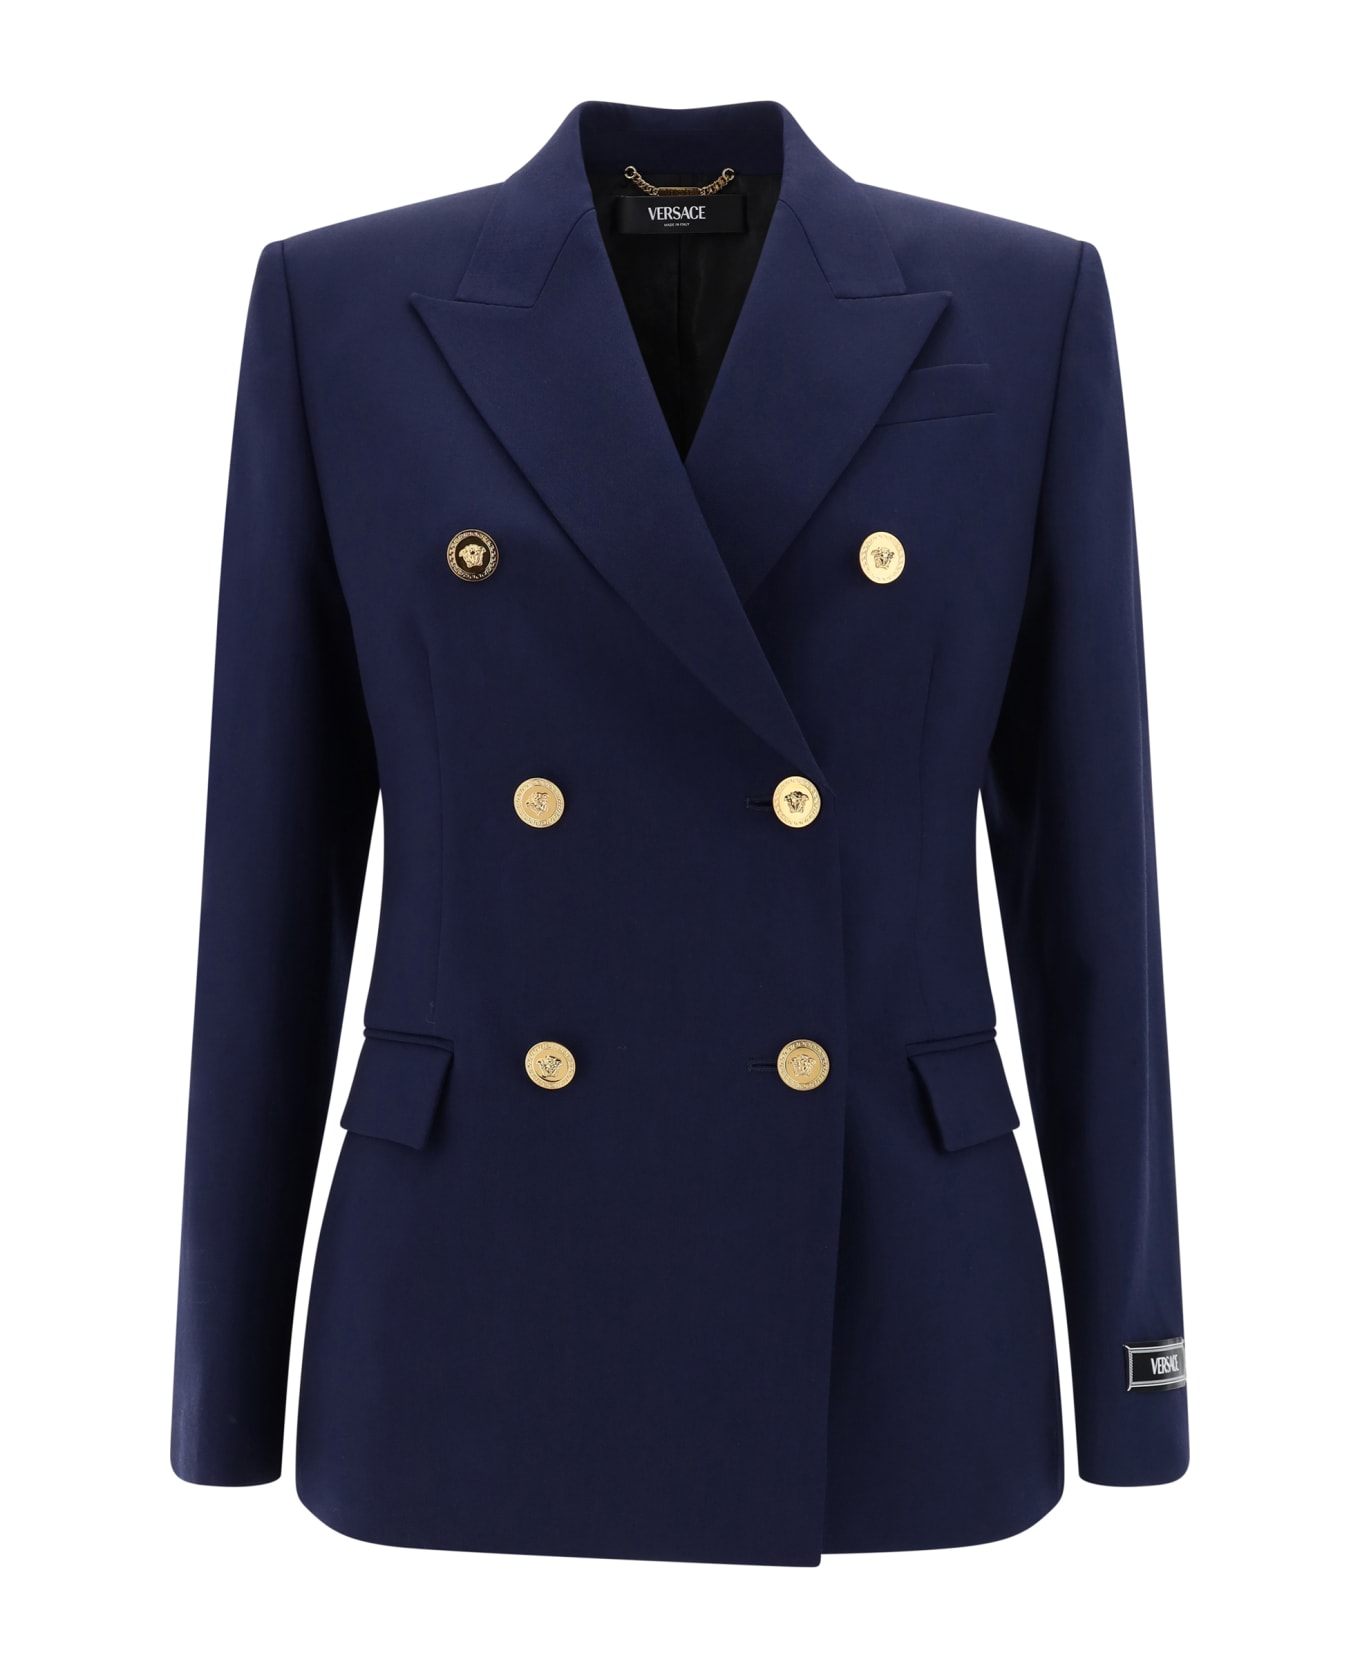 Versace Blazer Jacket - Navy Blue